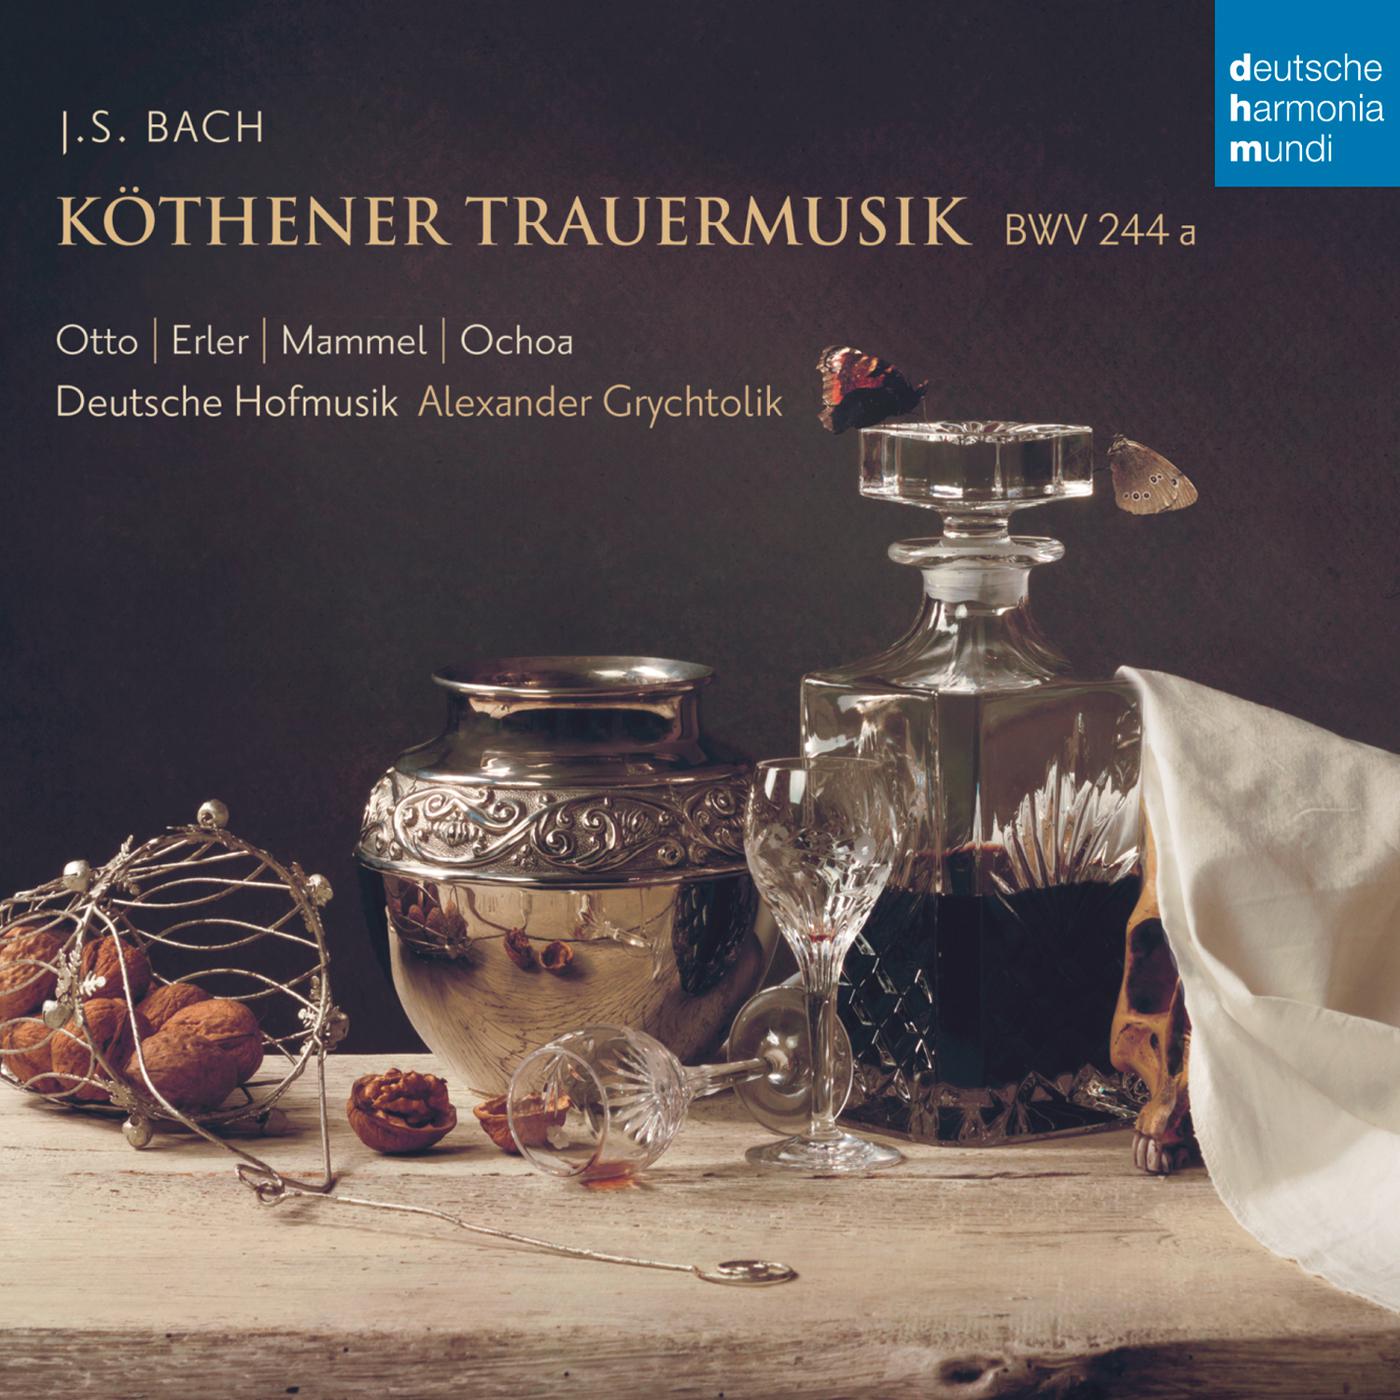 Bach: K thener Trauermusik, BWV 244a